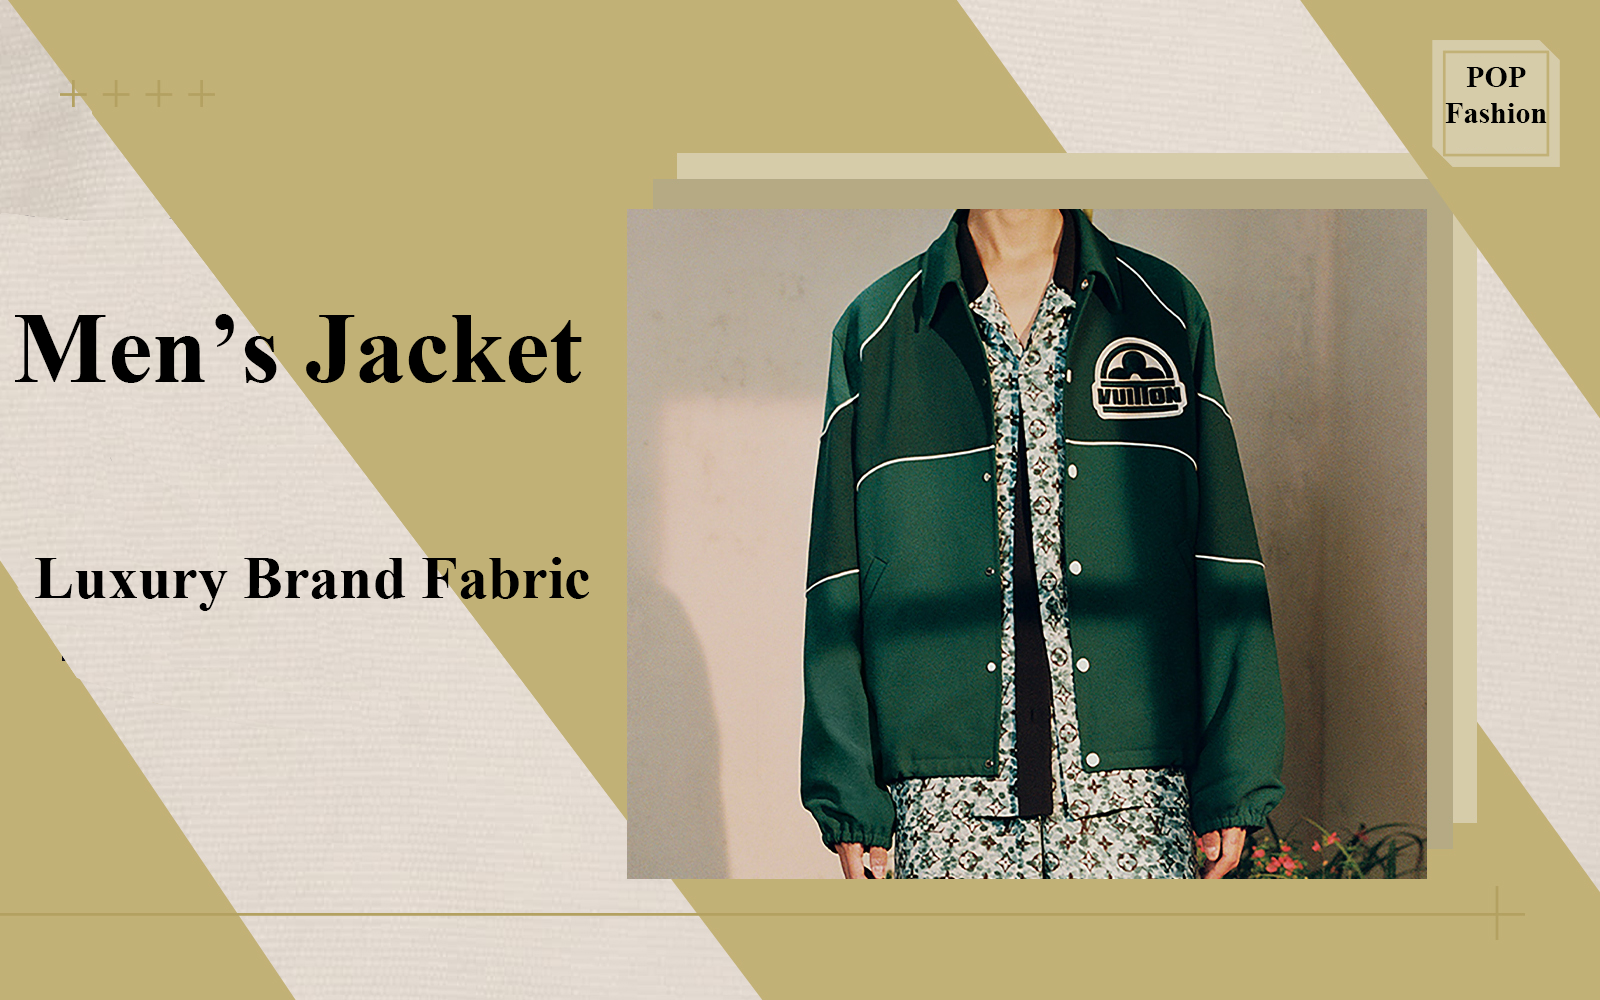 The Luxury Brand Fabric Analysis of Men's Jacket